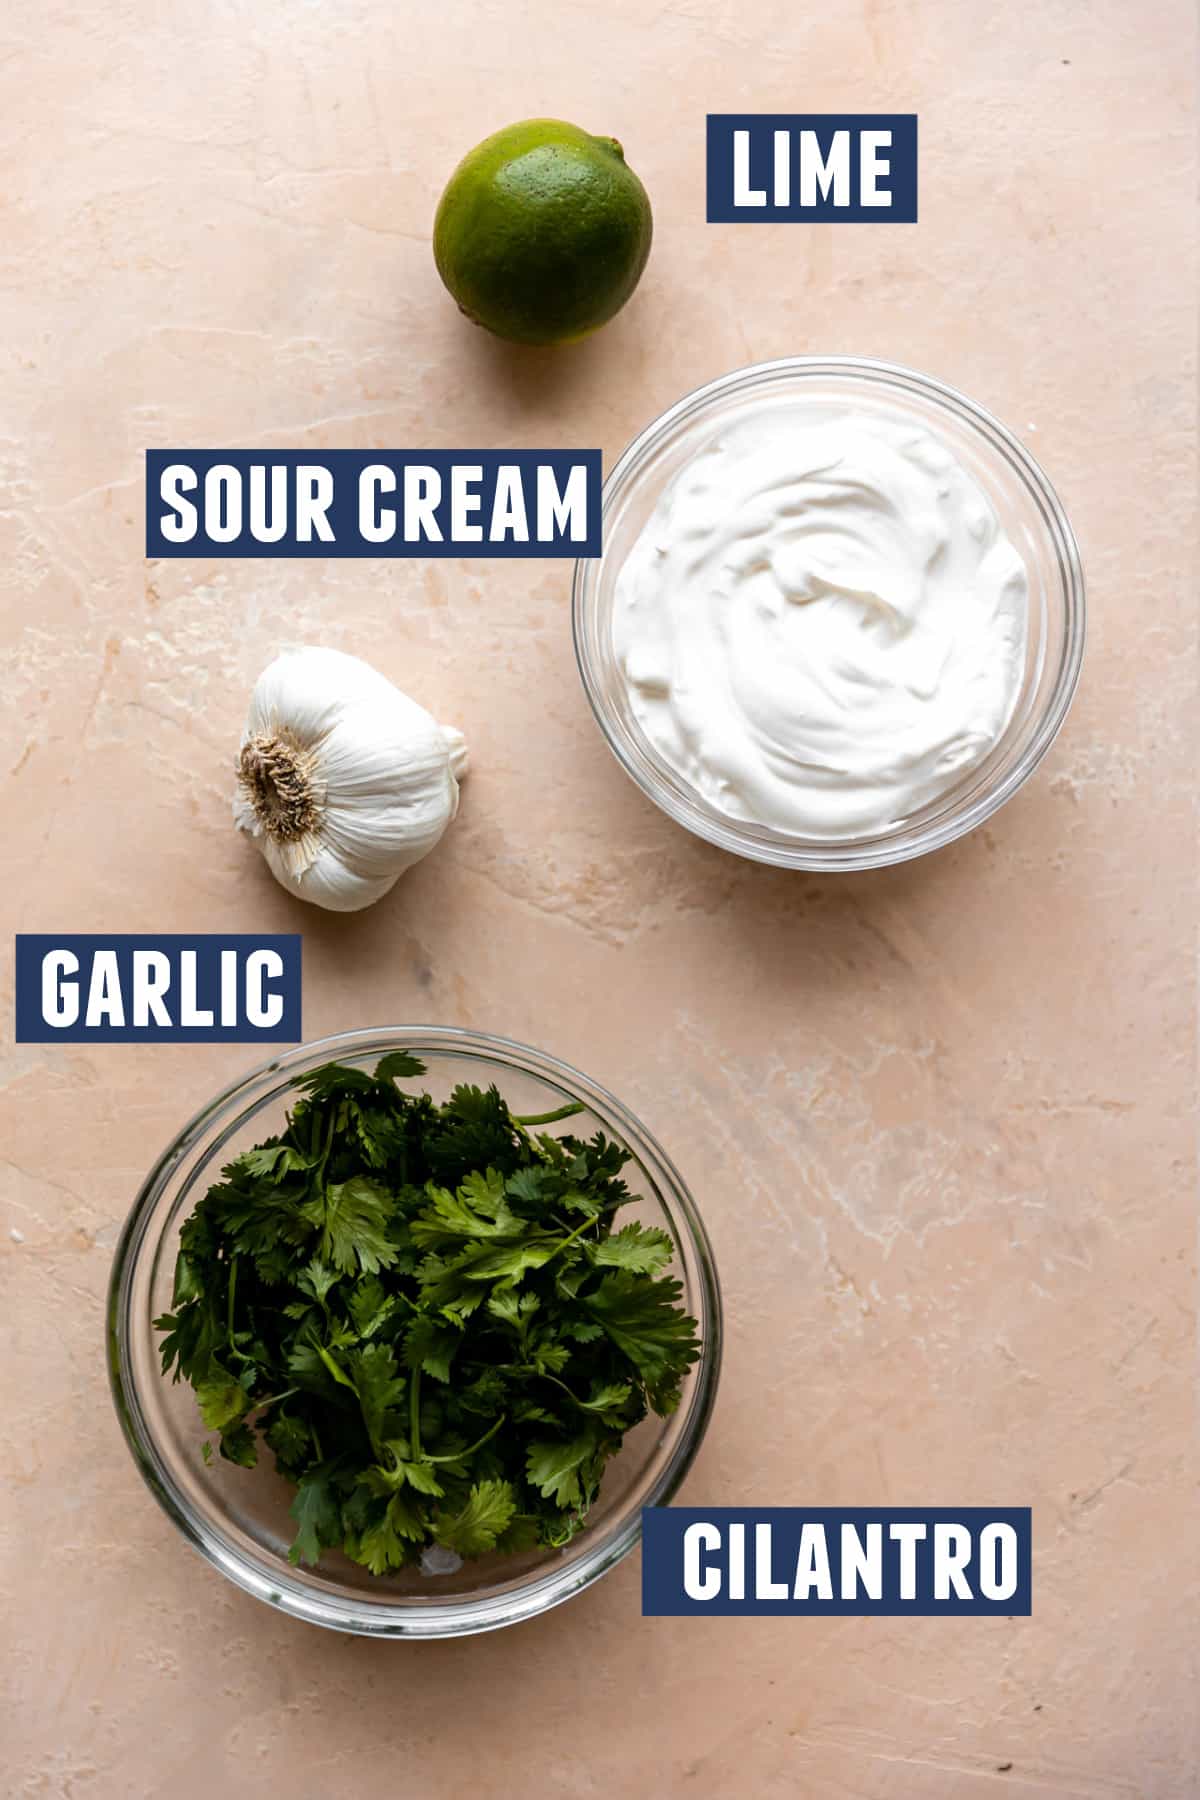 Bowl of sour cream, bowl of fresh cilantro, a bulb of garlic and a lime.